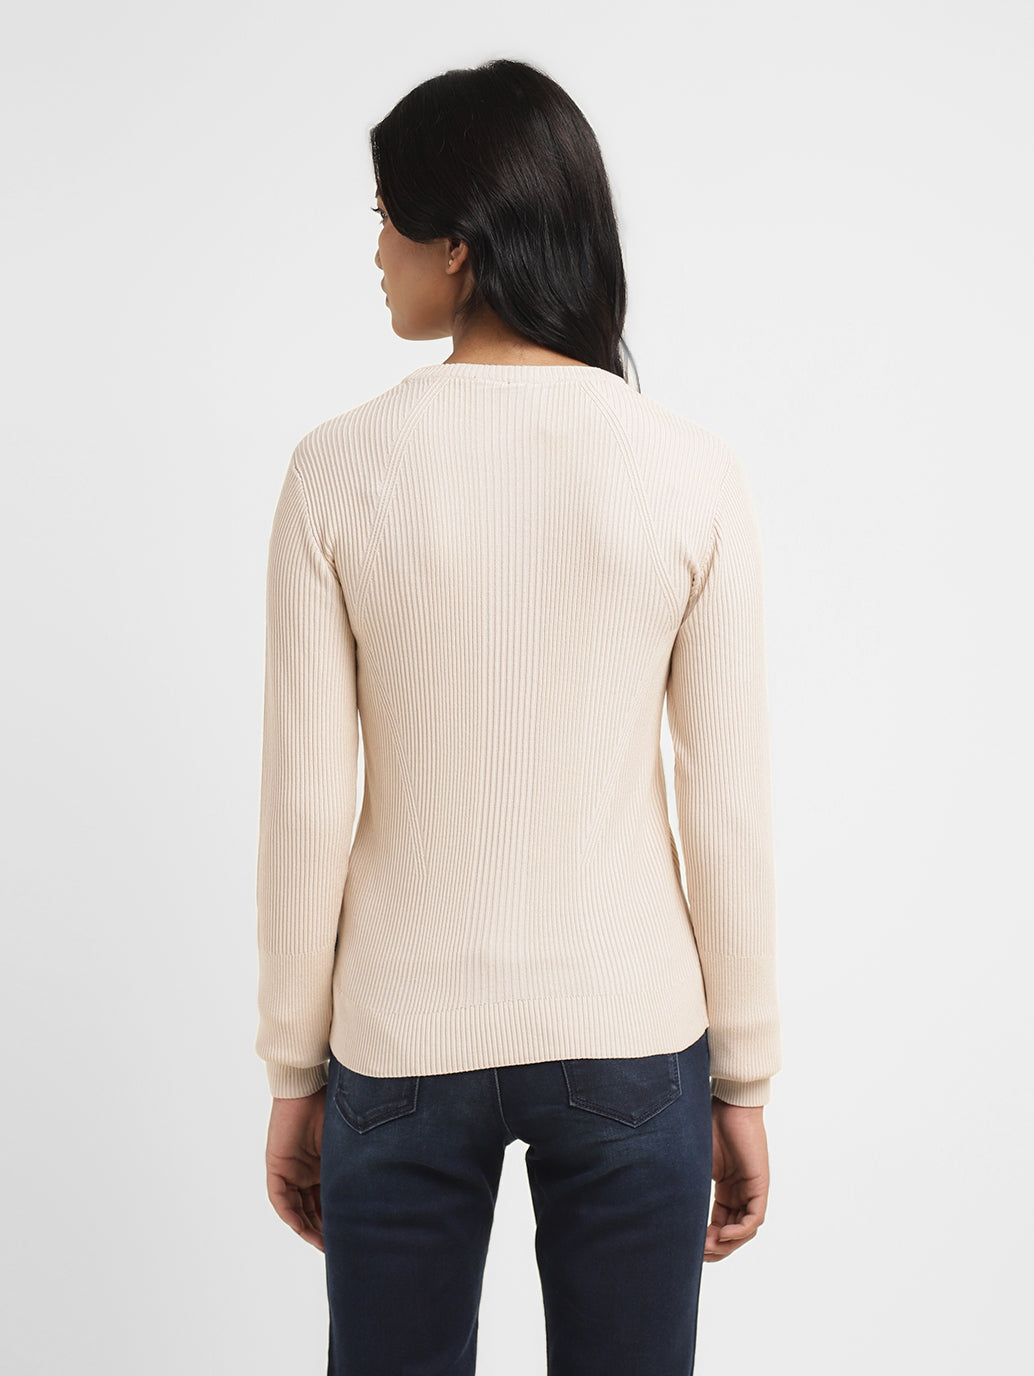 Women's Self Design Beige Crew Neck Sweater